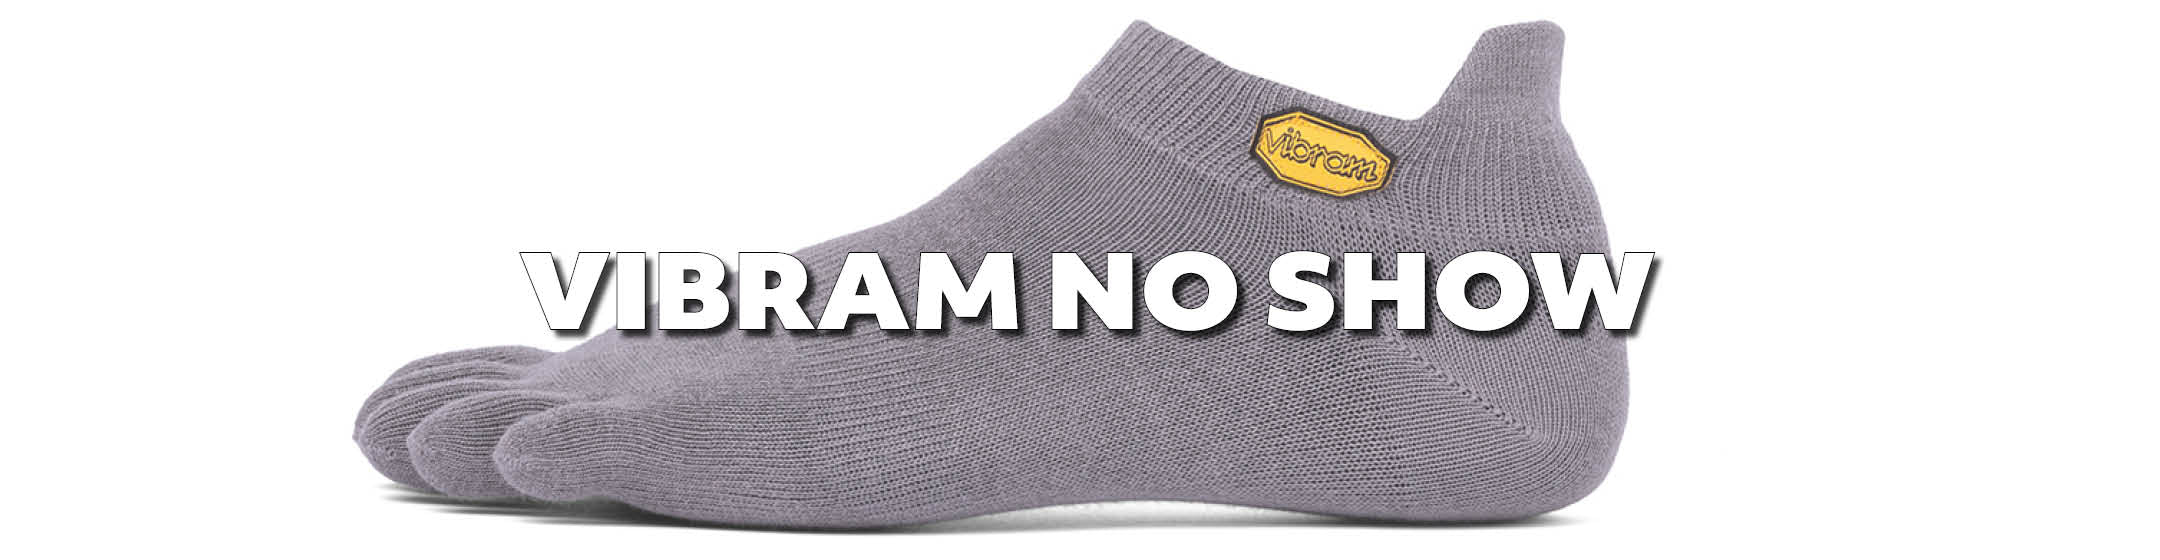 Vibram No show Toe Socks Singles